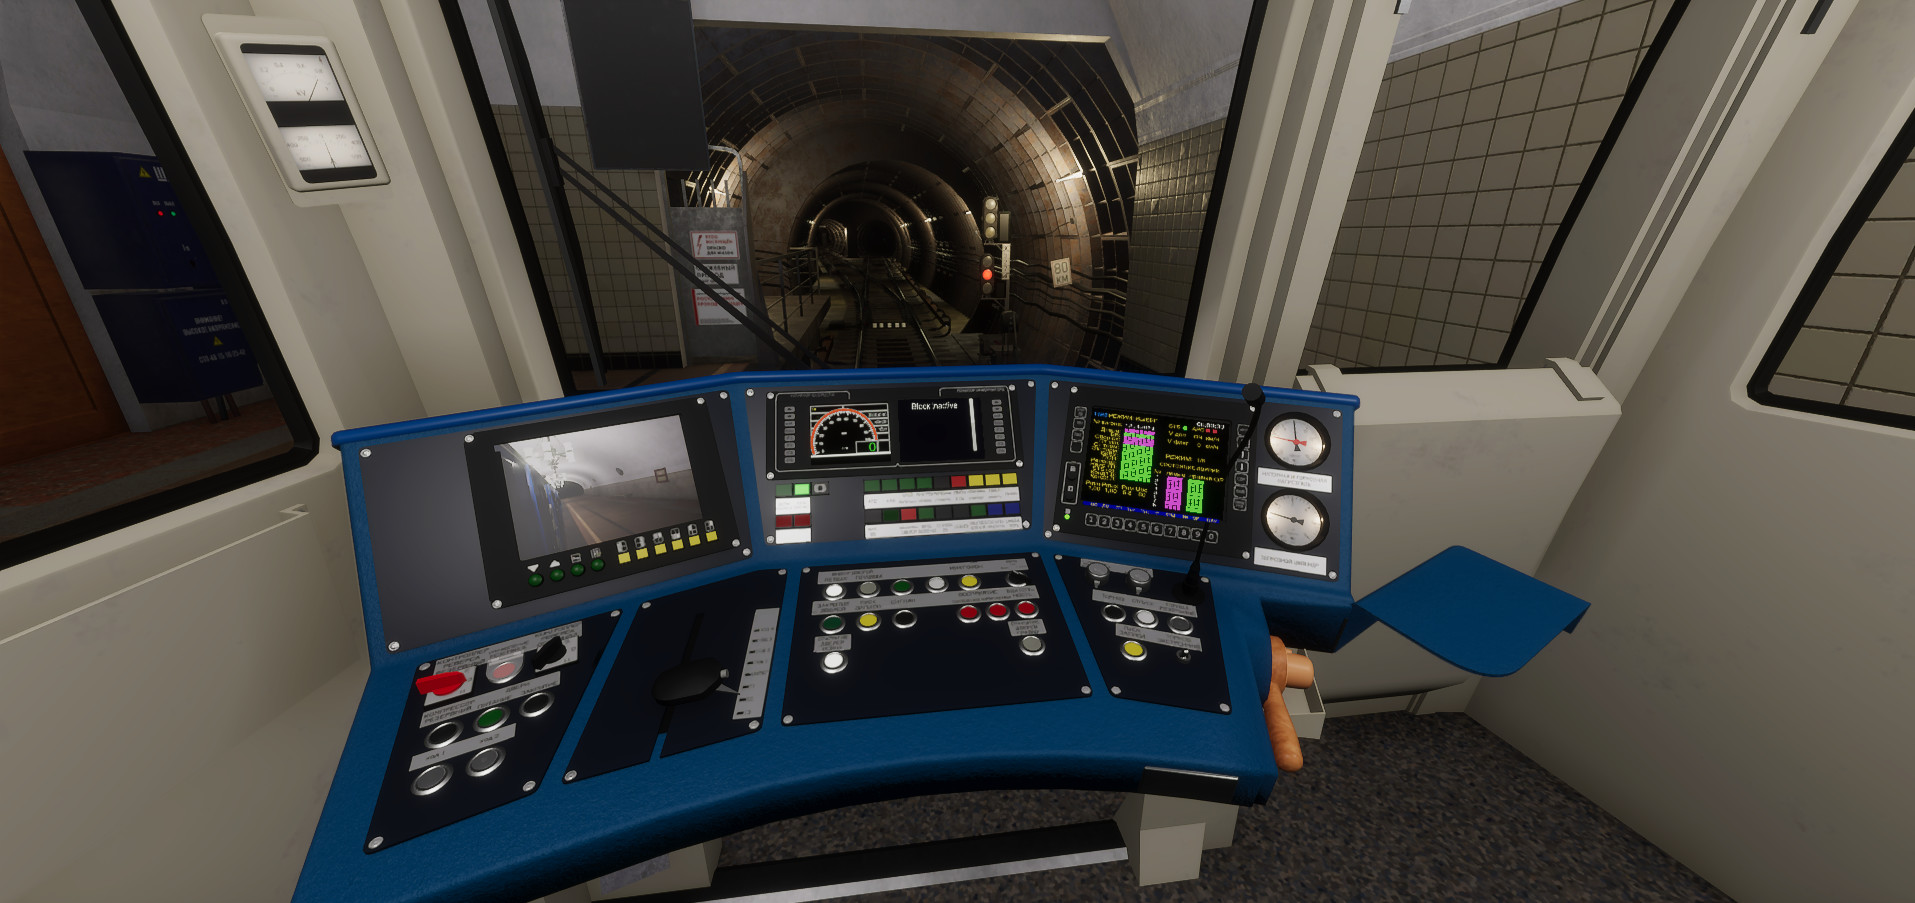 Metro Simulator 2 Steam CD Key